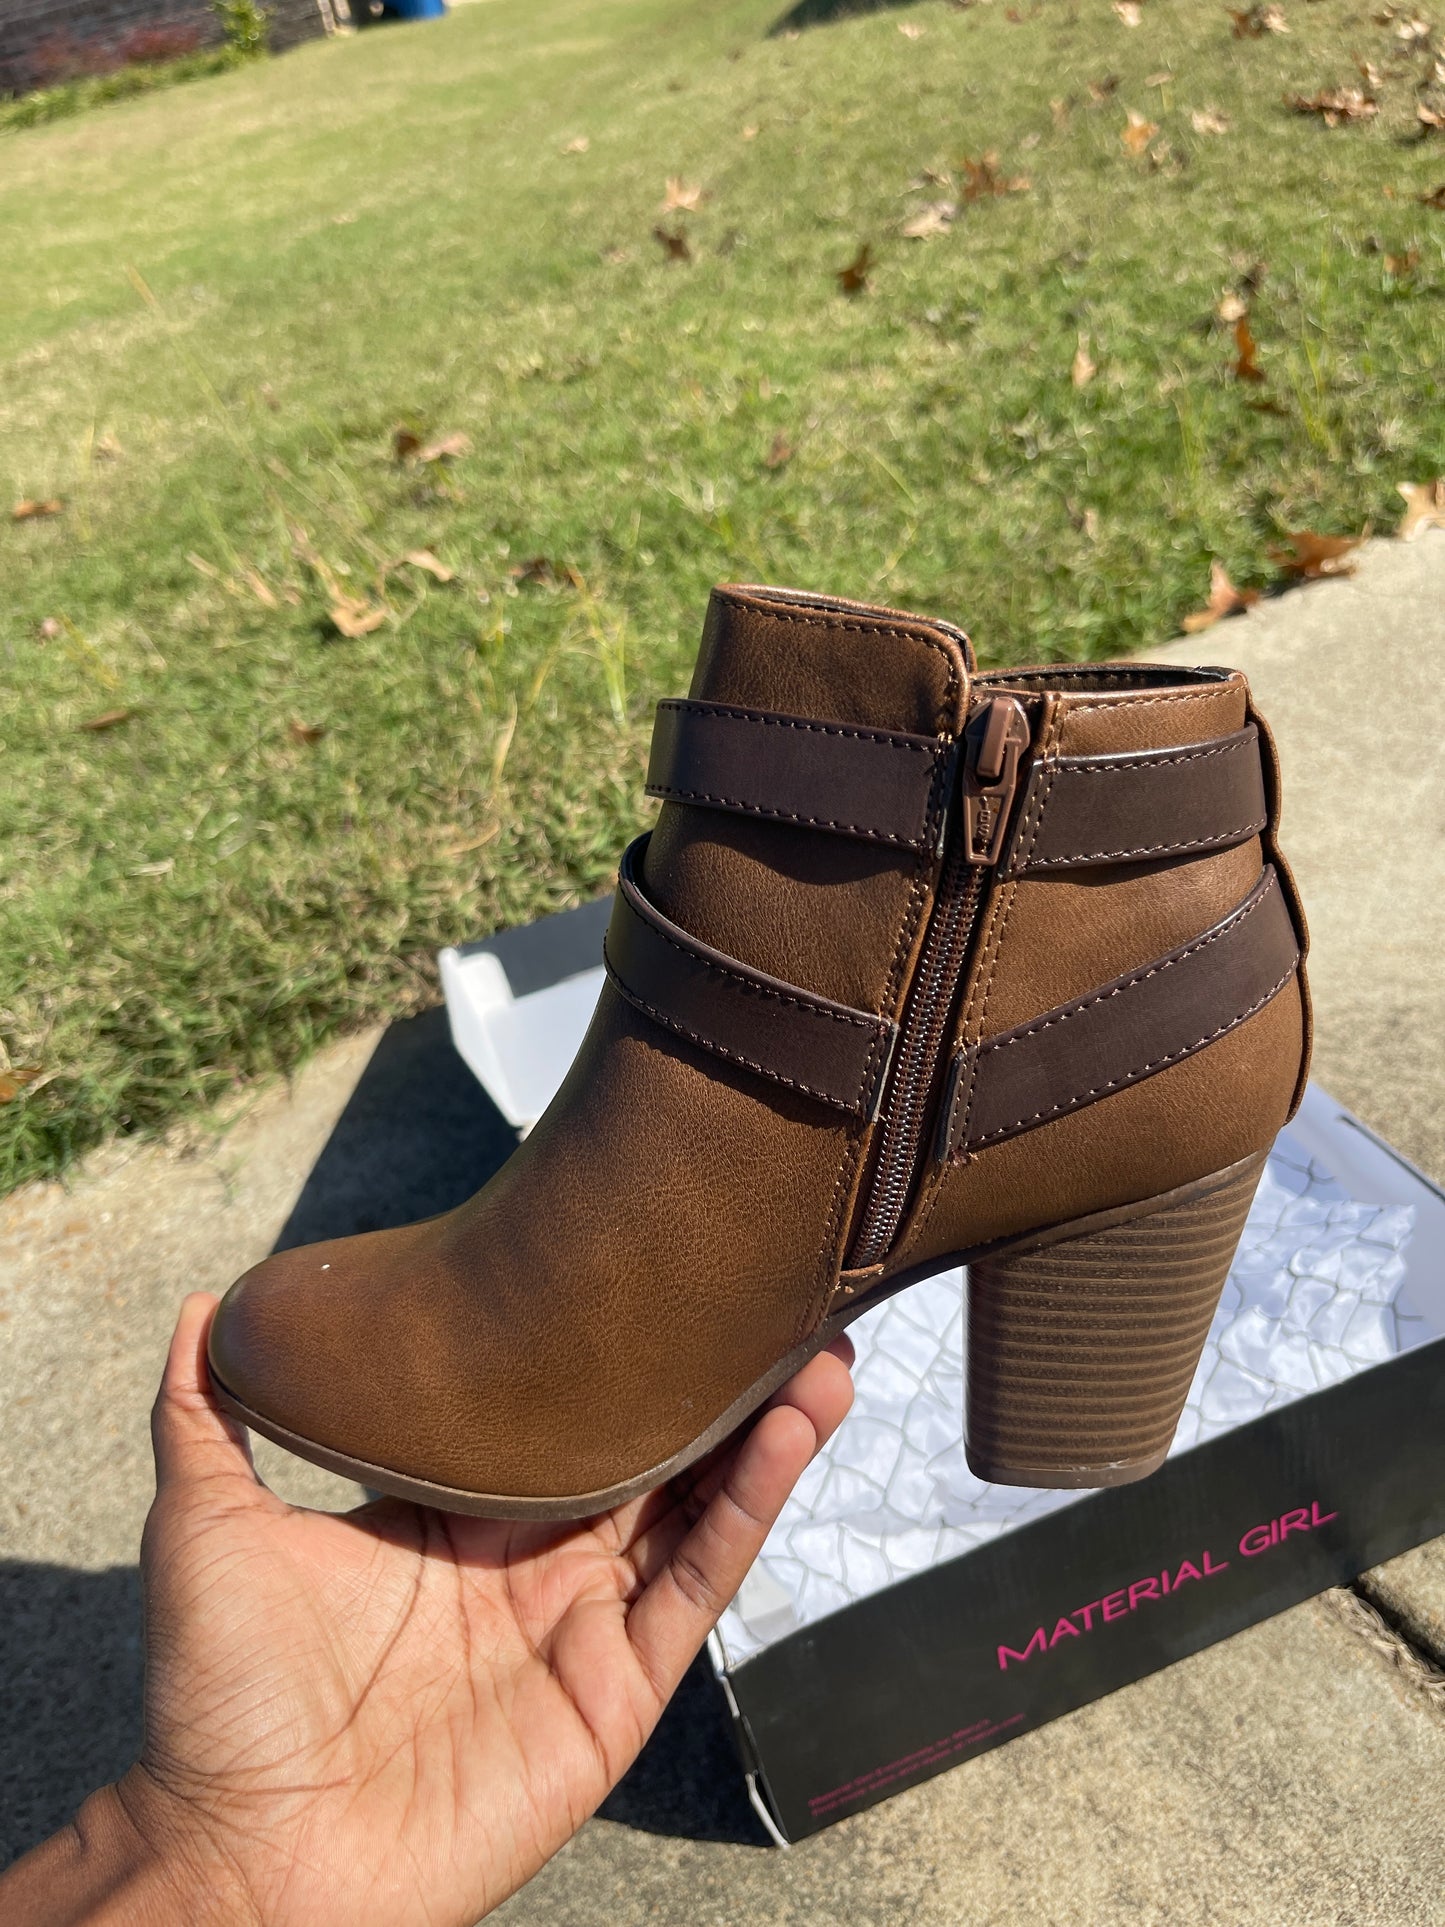 NEW Material girl brown boots women sz 8